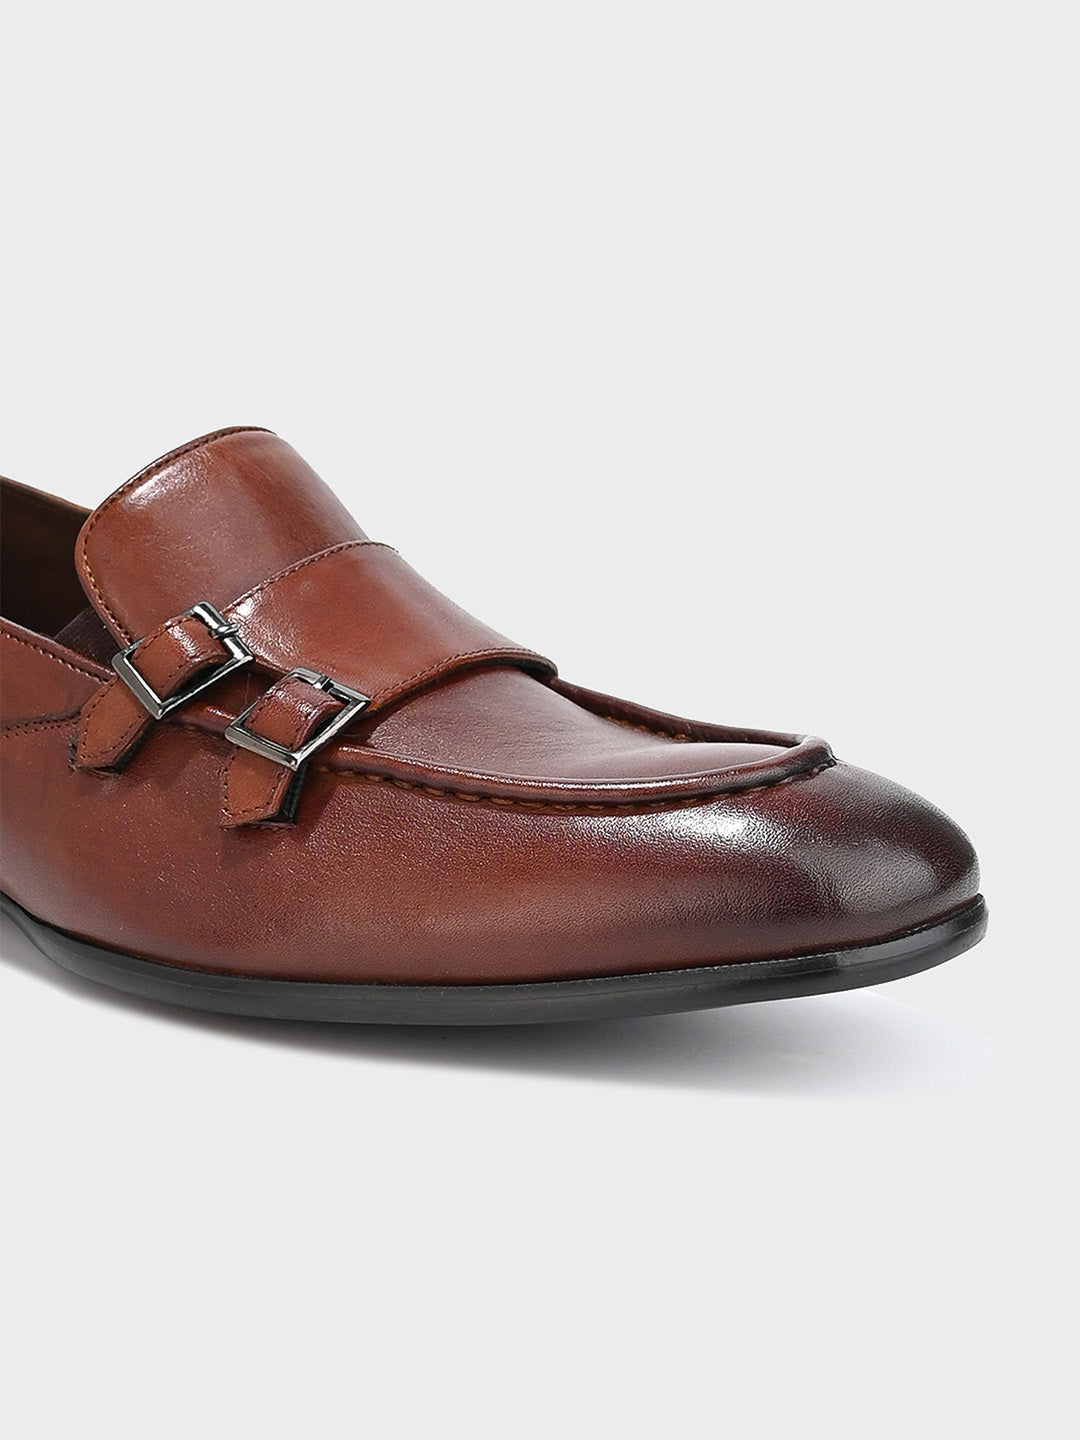 Men's Tan Leather Slip-on Monk Shoes